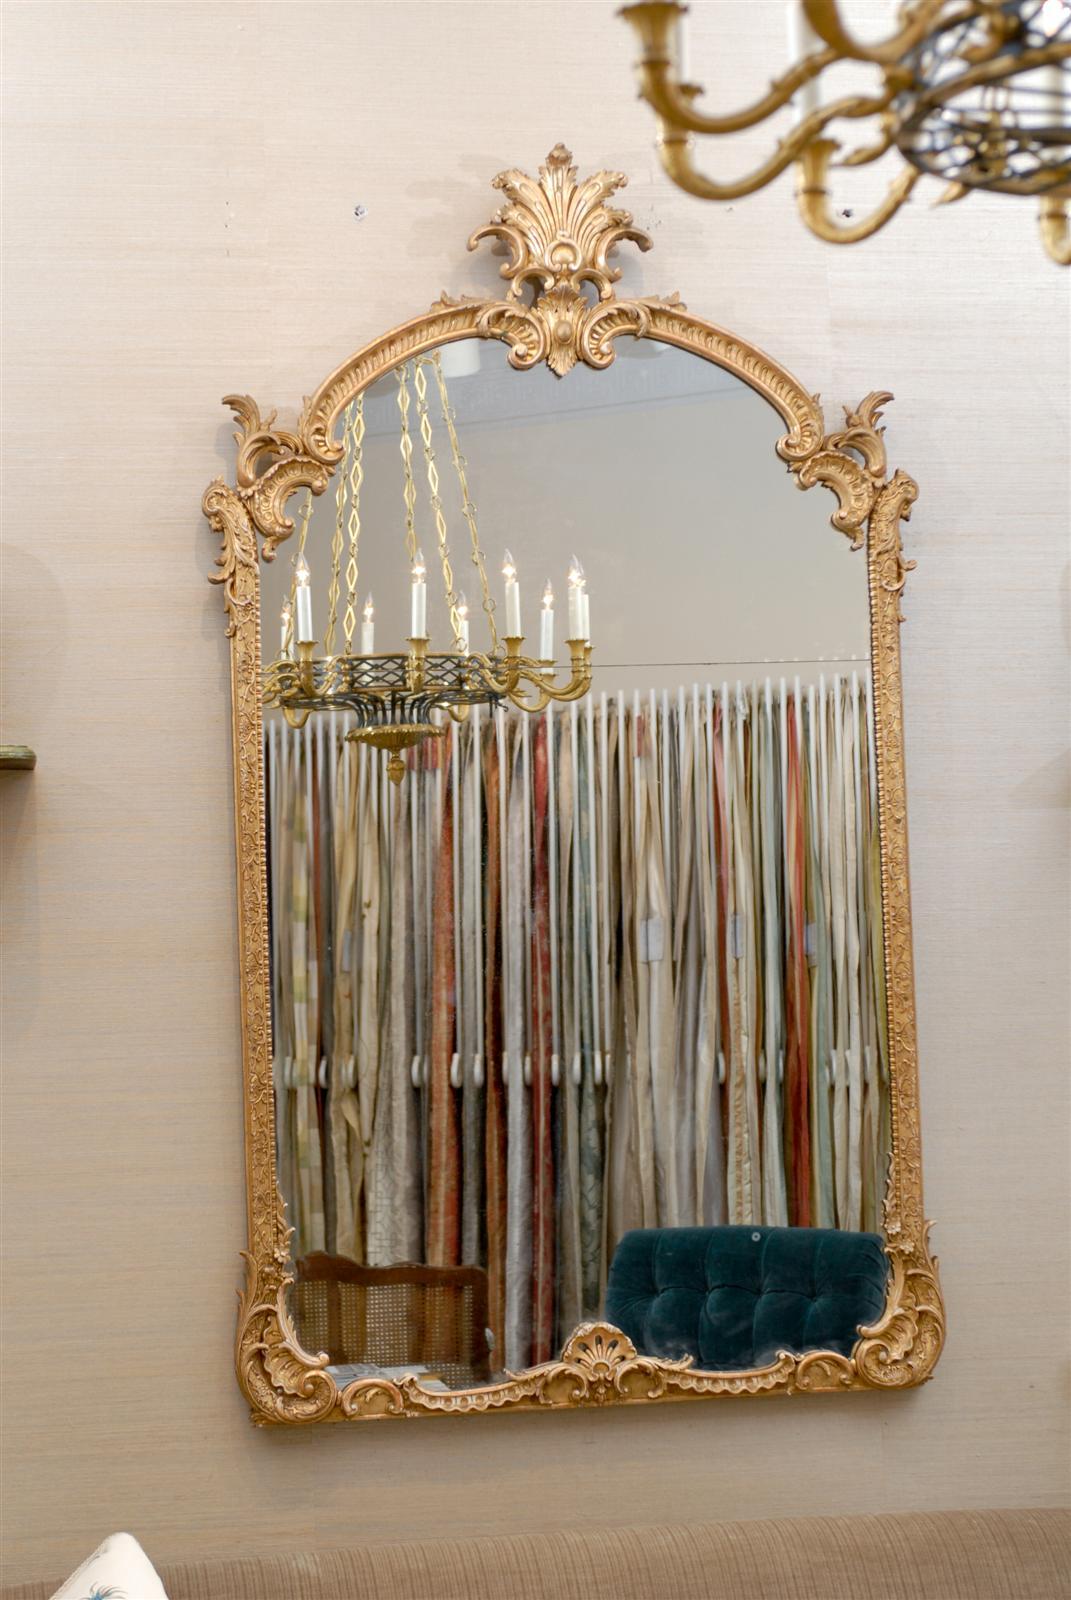 Beautiful Gilded Regence Style Mirror
39.5